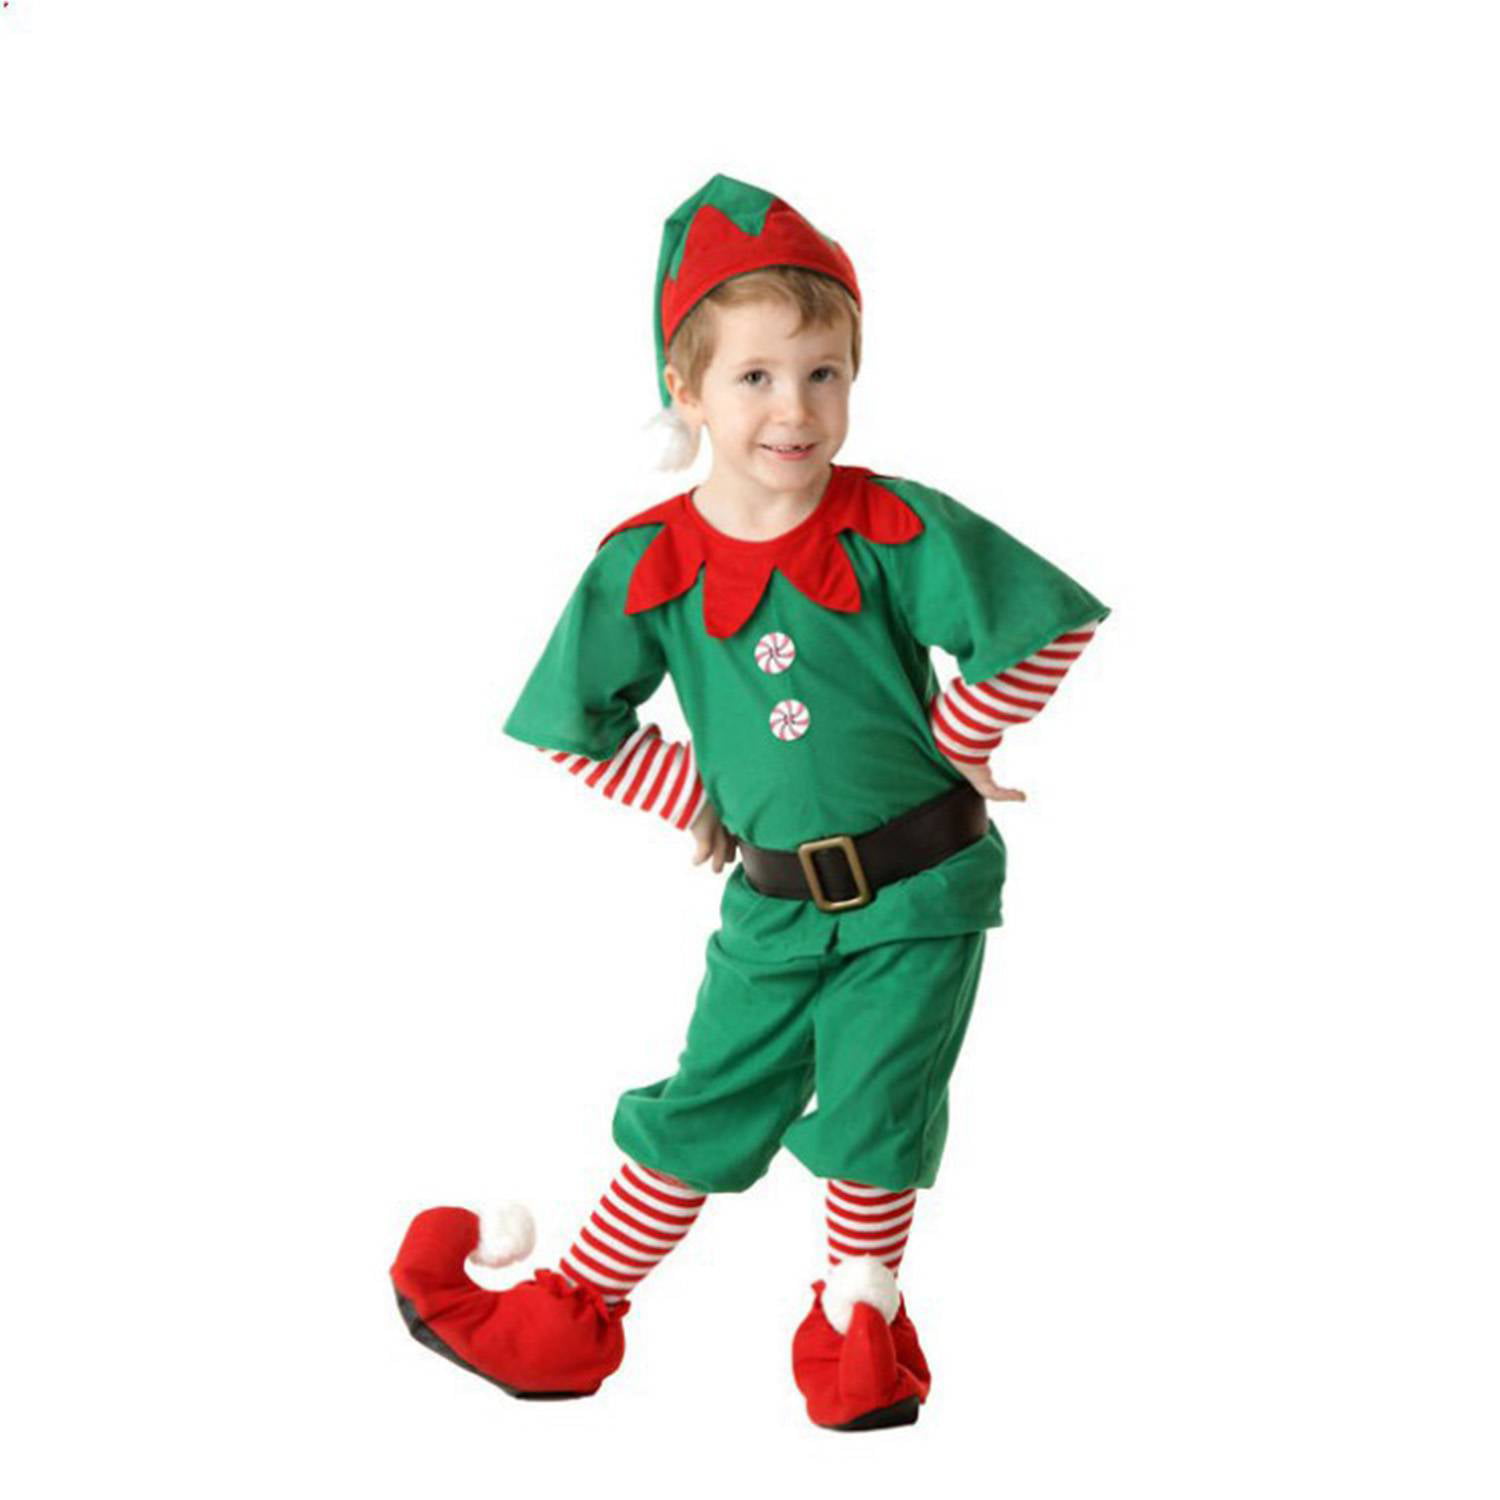 New Child Boys Elf Costume Santa's Helper Boys Christmas Kids Fancy Dress Outfit 